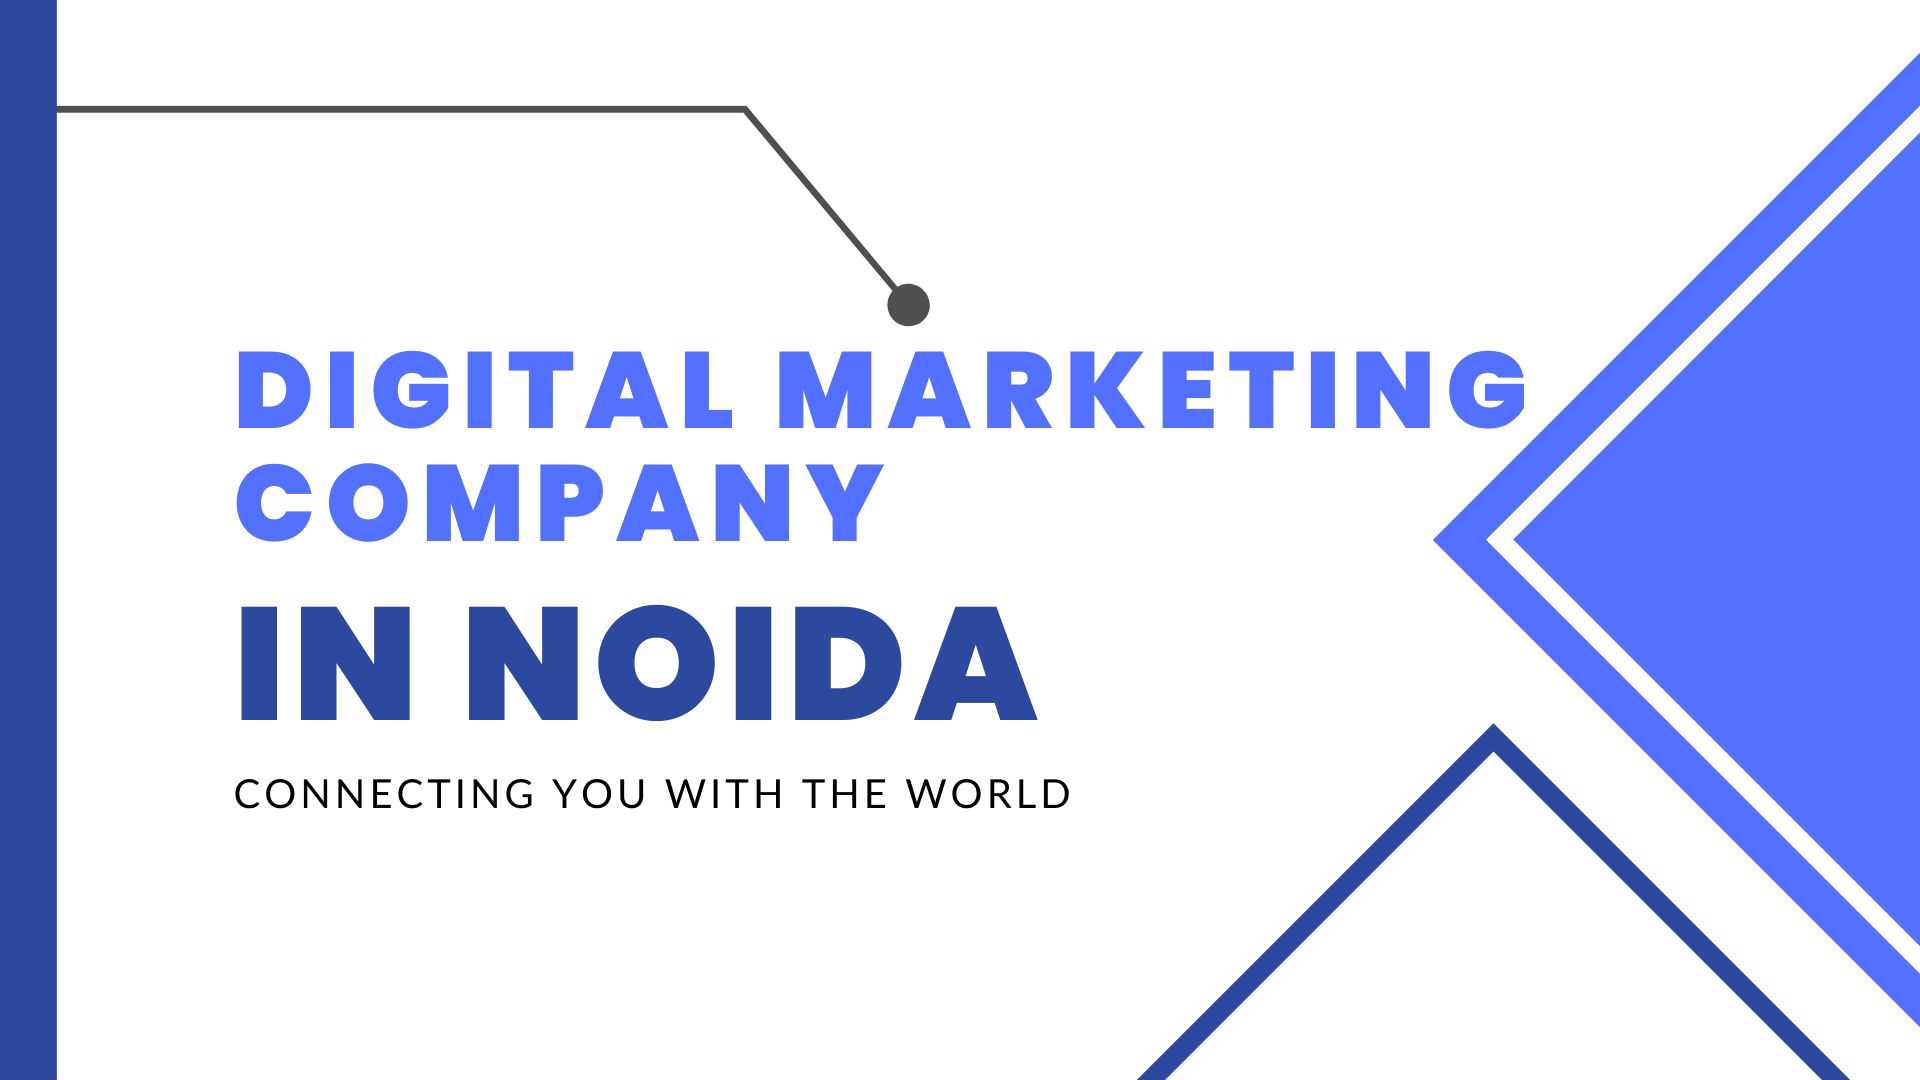 Digital marketing company Digital Marketing Company in Noida